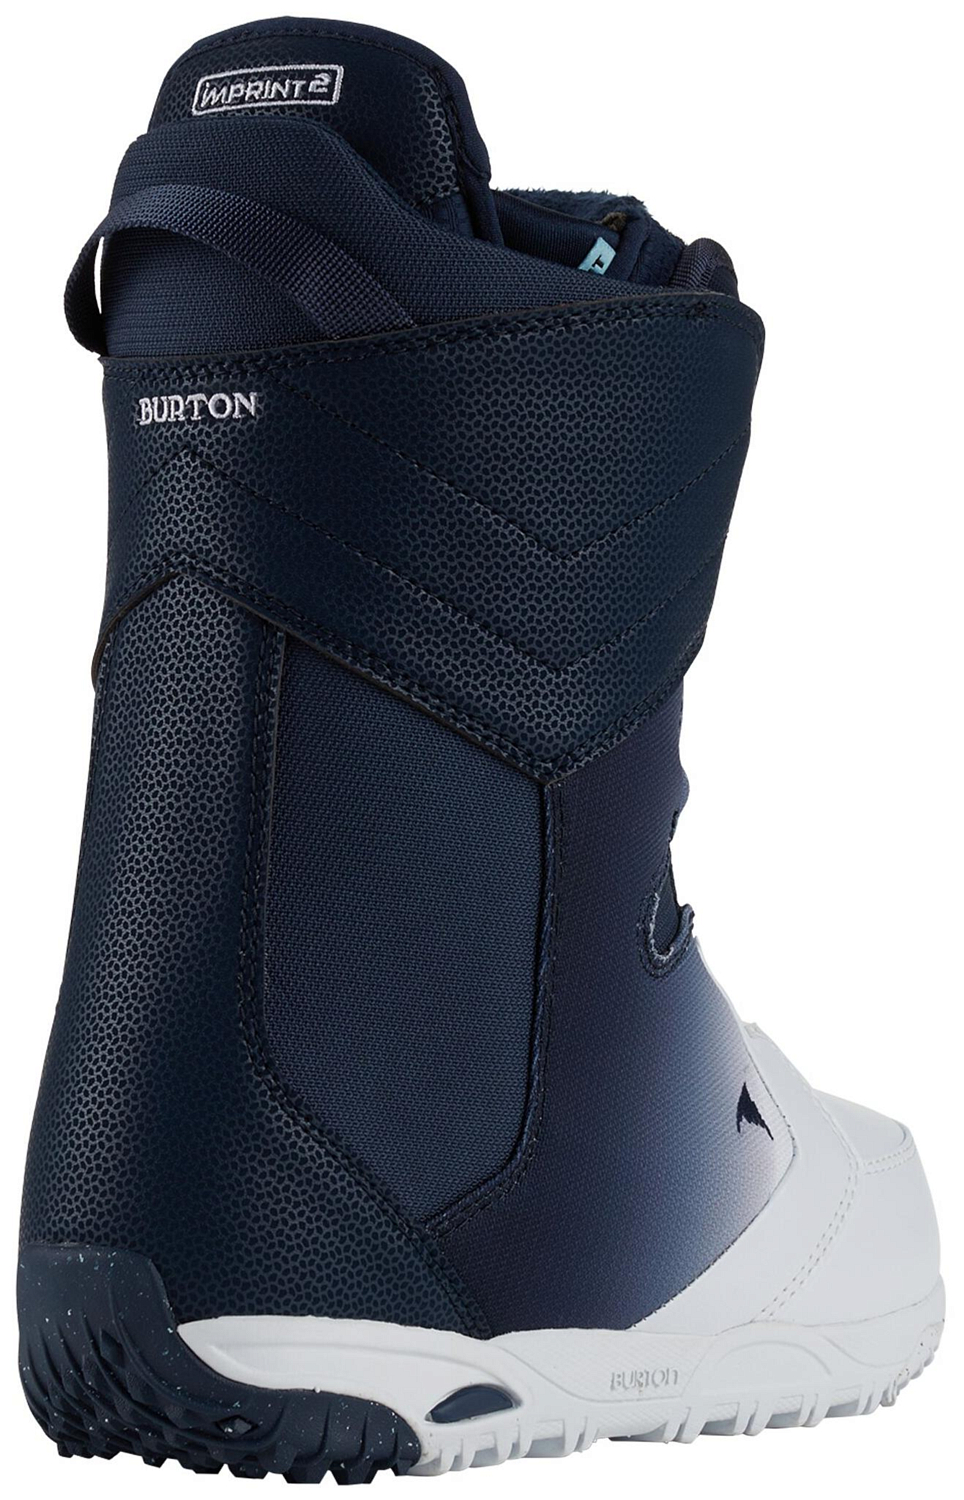 Ботинки для сноуборда BURTON 2020-21 Limelight Boa Blue/White fade